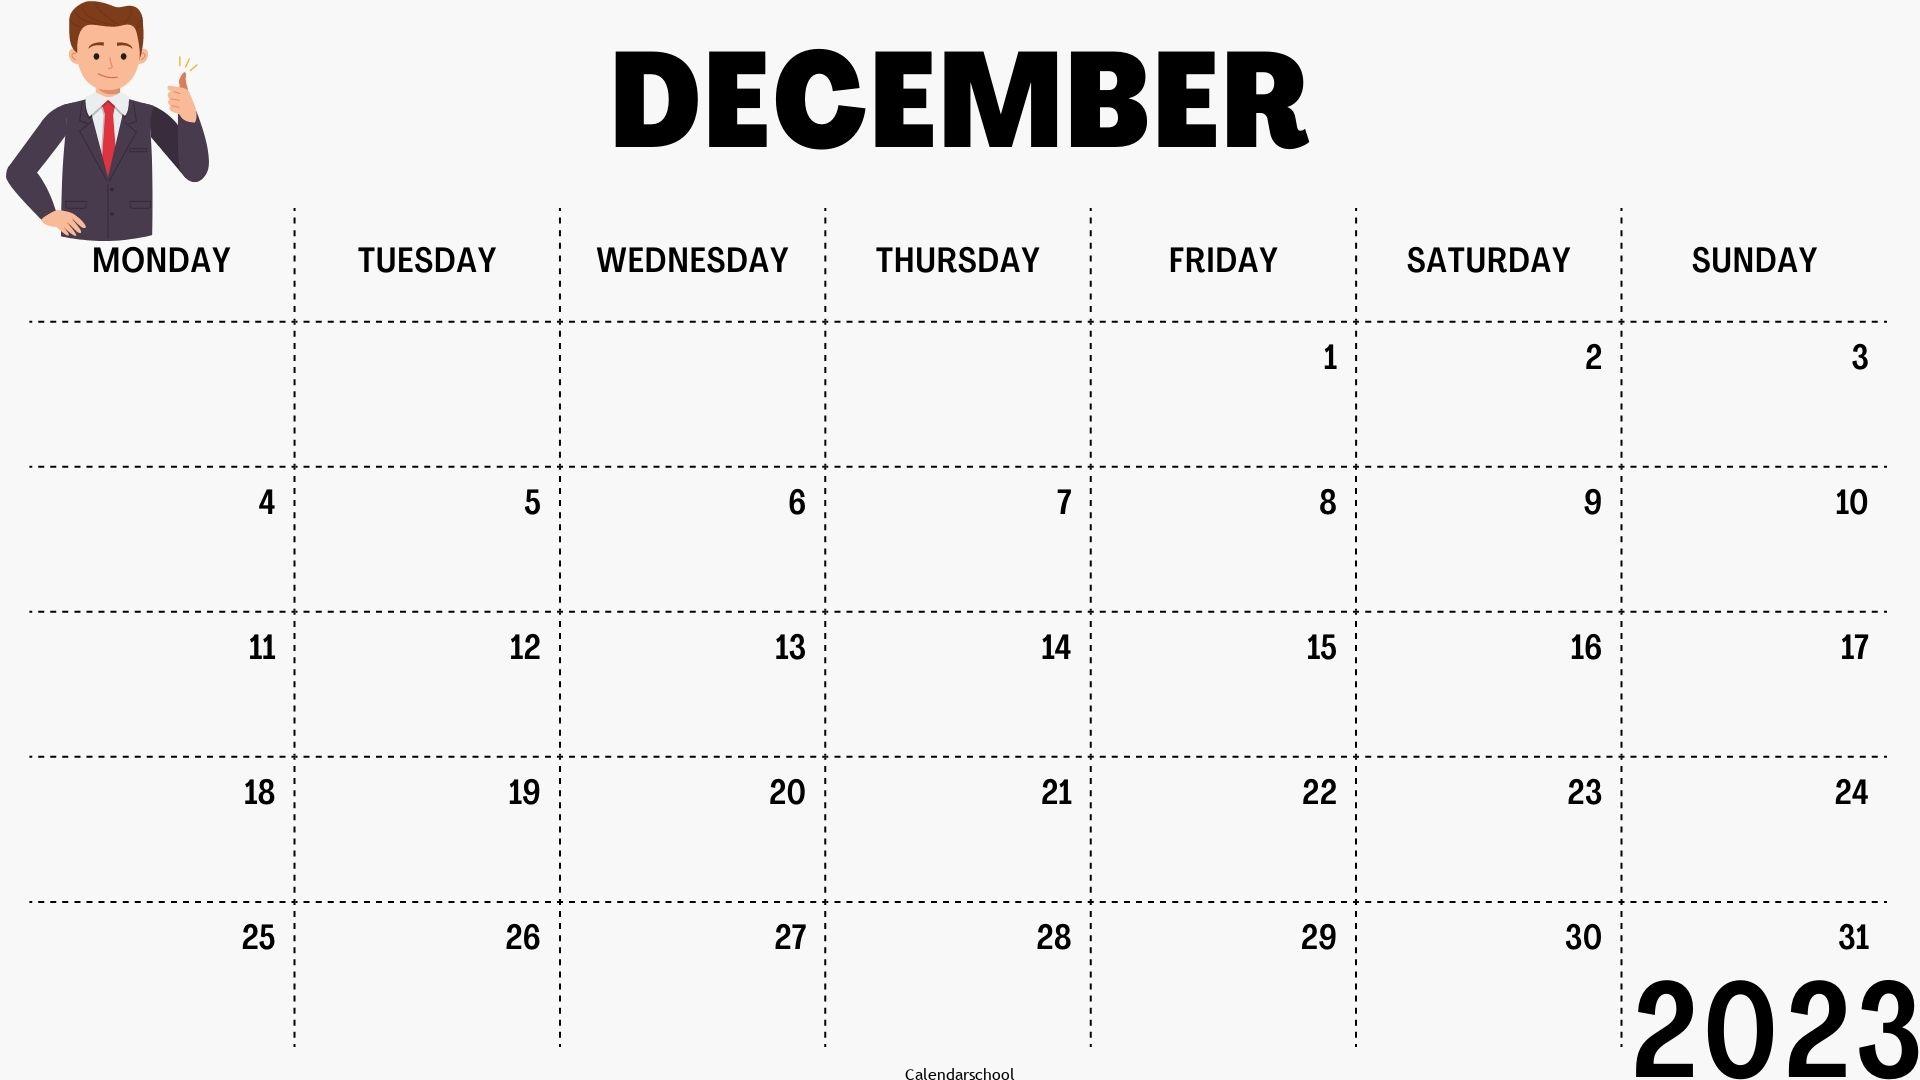 December 2023 Calendar Download